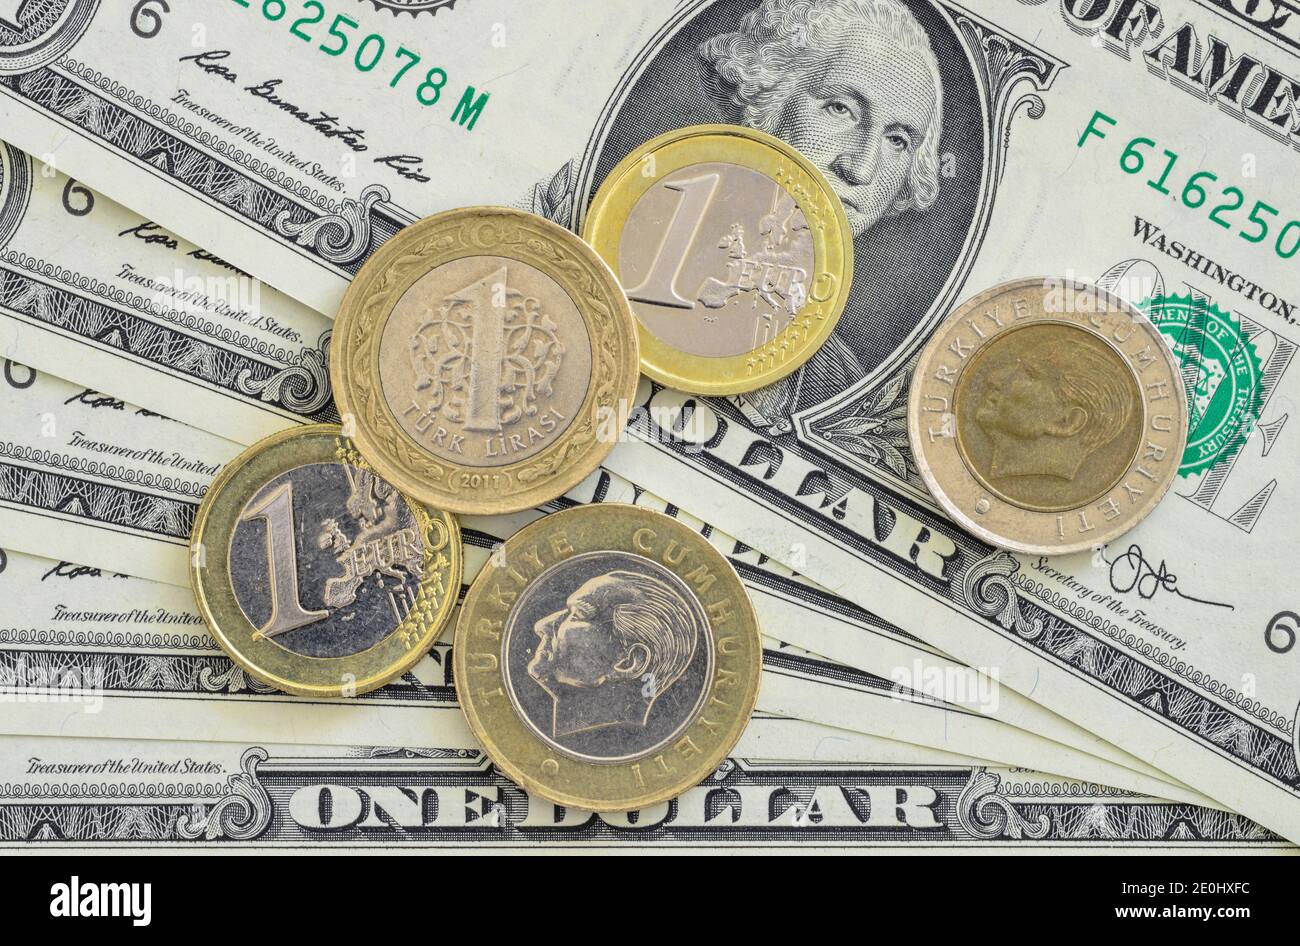 US-Dollar - Tuerkische Lira Muenzen - Euromuenzen Stock Photo - Alamy